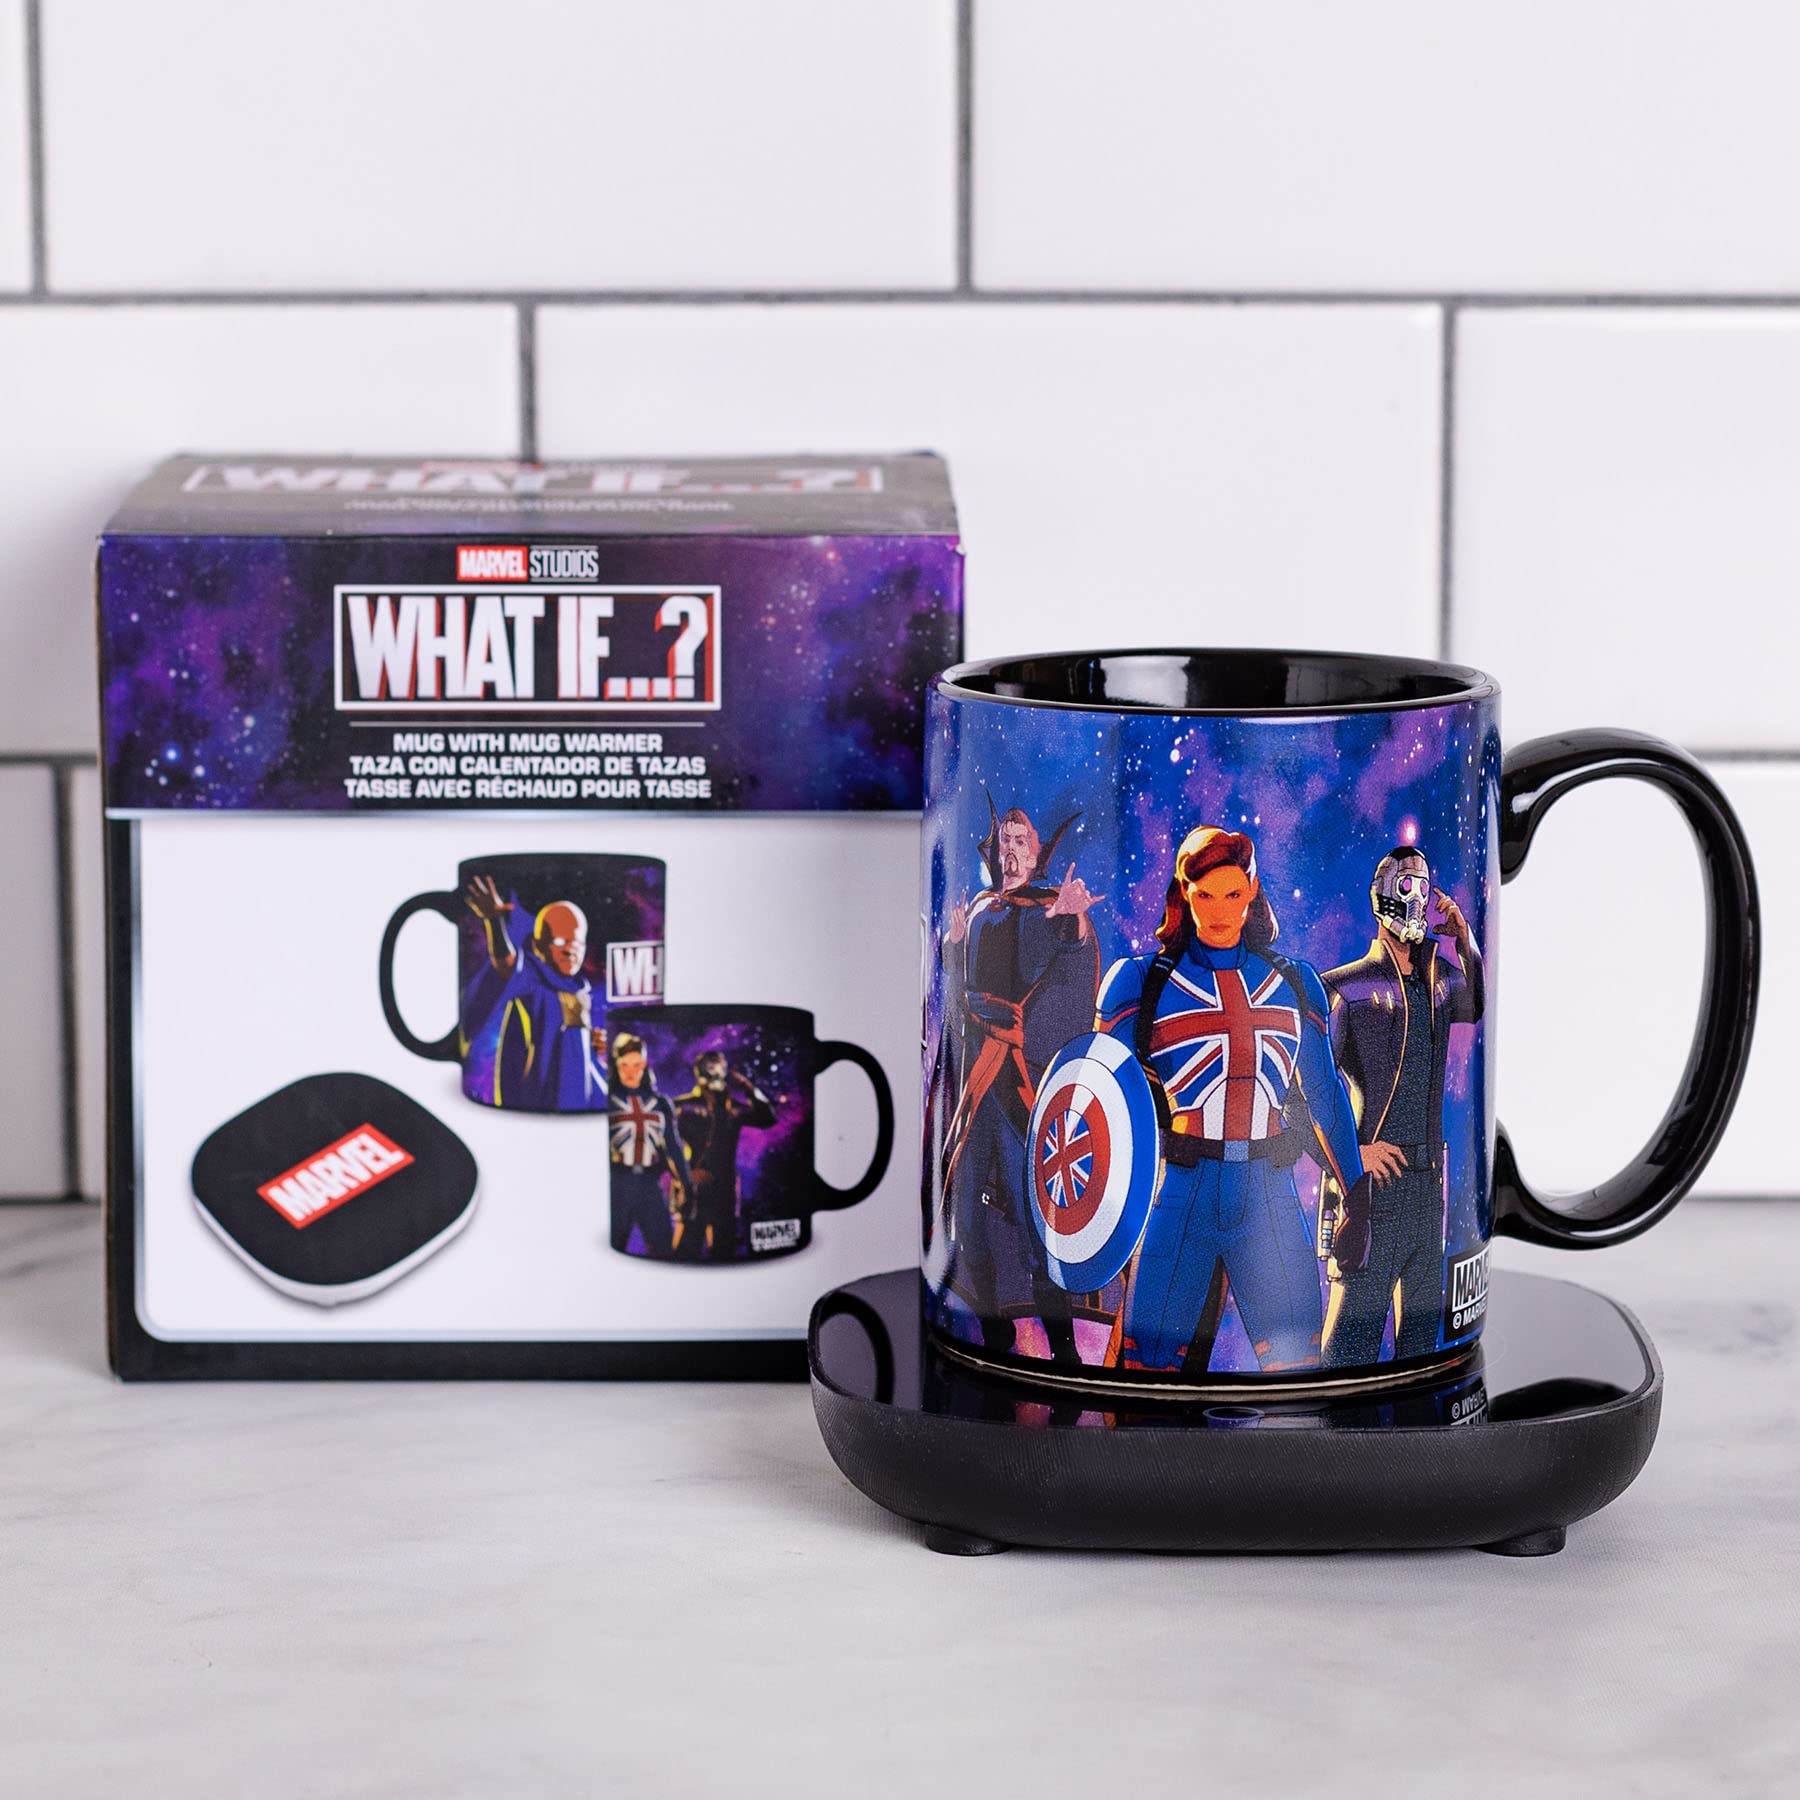 Uncanny Brands Marvel What If Mug Warmer with Mug – Keeps Your Favorite Beverage Warm - Auto Shut On/Off